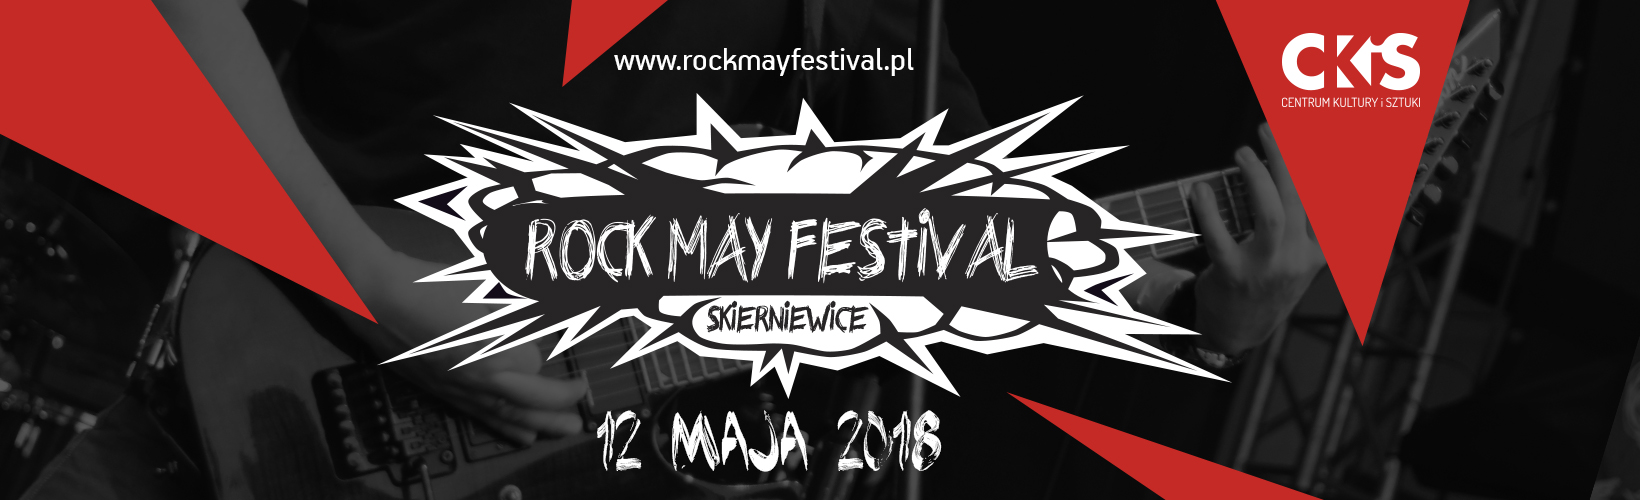 Rock May Festival 2018 - Skierniewice